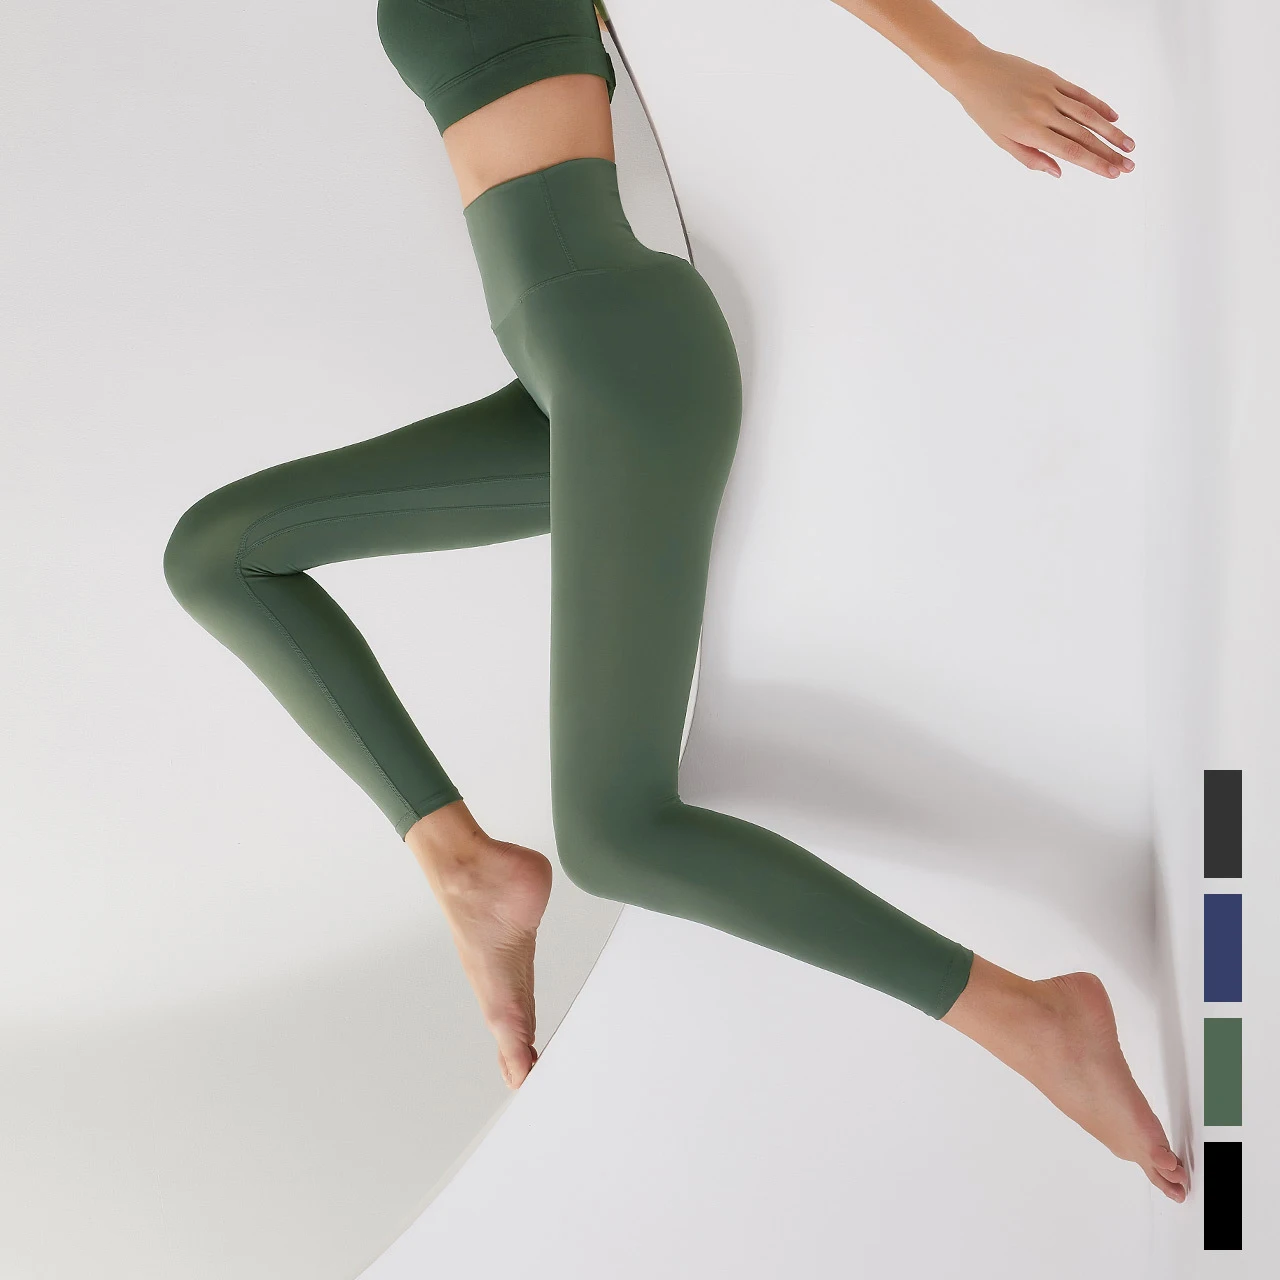 Lulu Women's Pants Breathable Yoga Sport High Waist Seamless Leggings Gym Clothing Tights Jogging Fitnes Trainning Sportswear